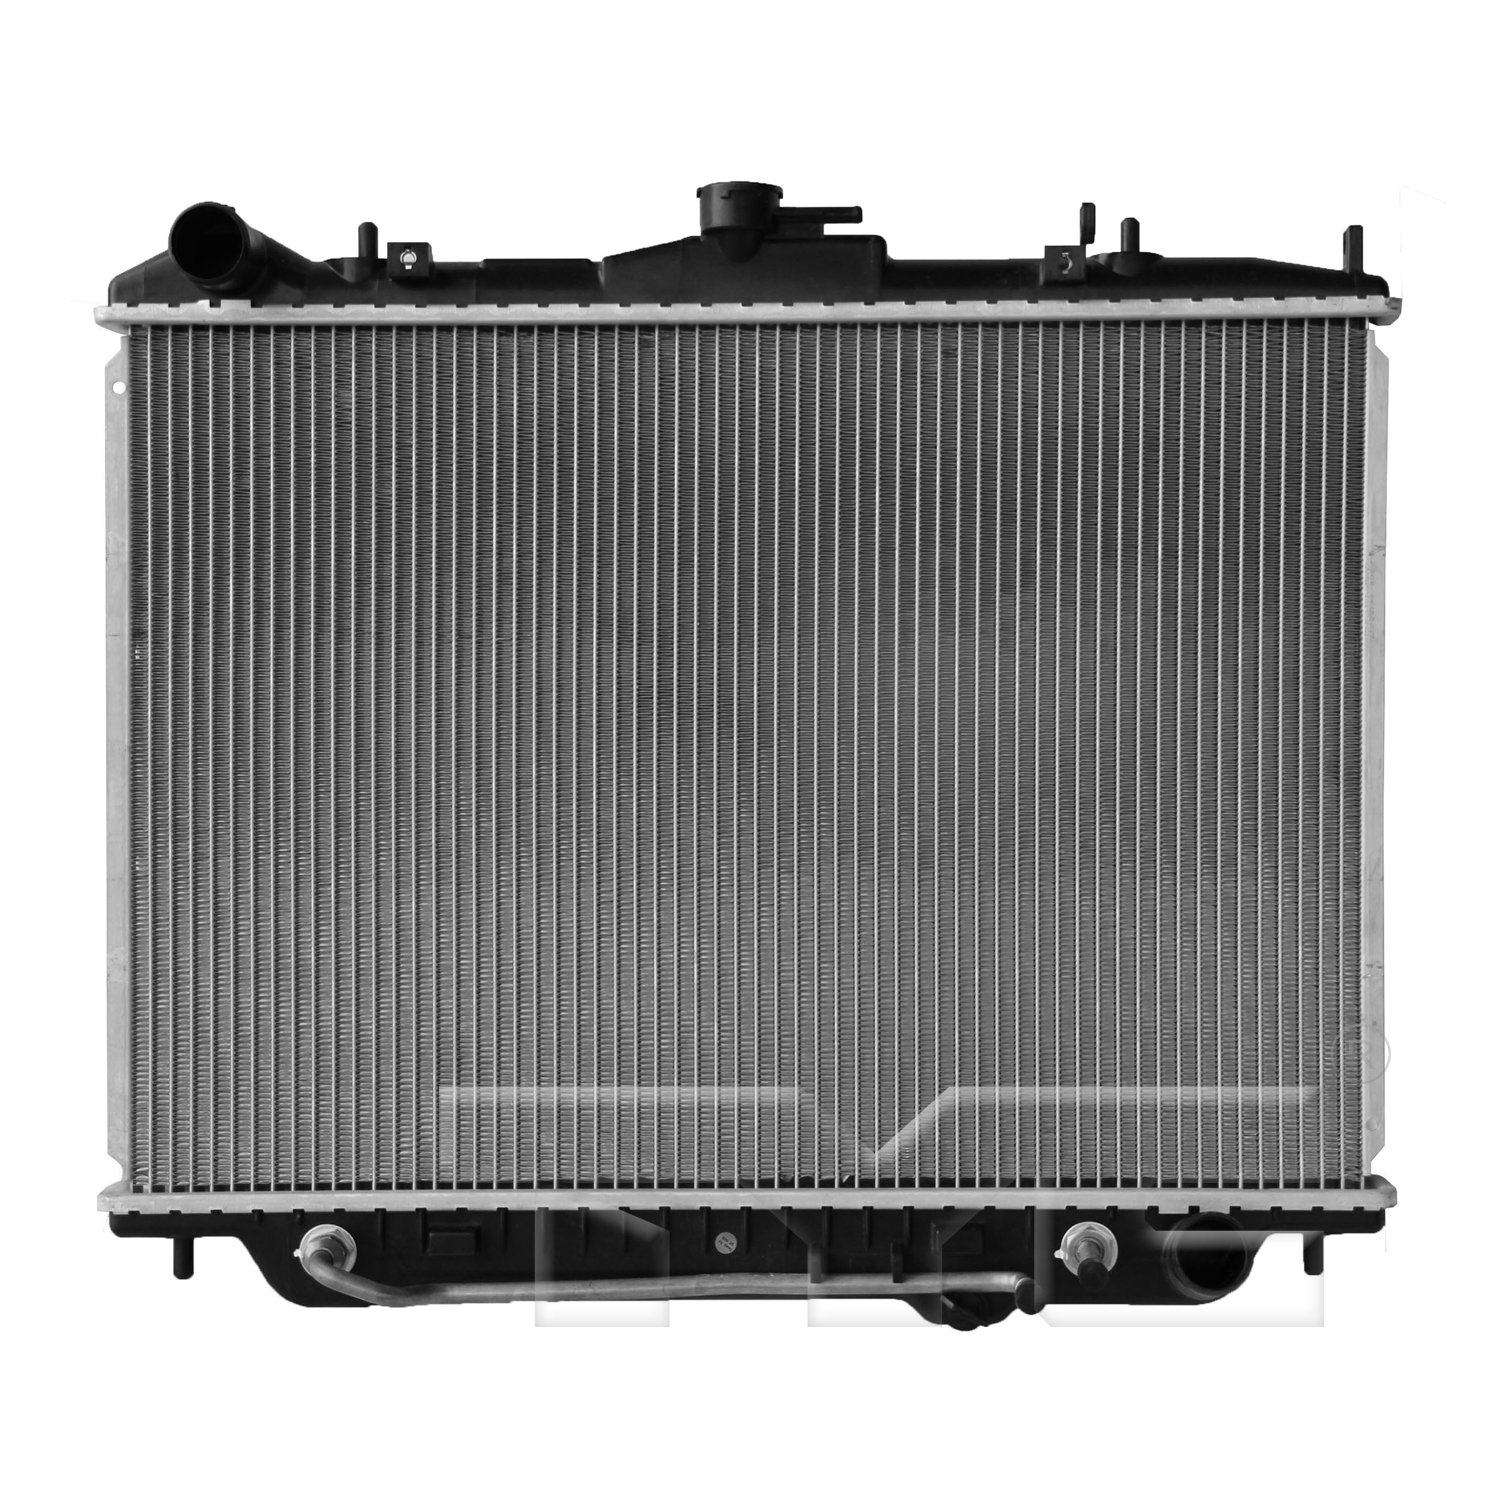 Aftermarket RADIATORS for ISUZU - AMIGO, AMIGO,98-99,Radiator assembly